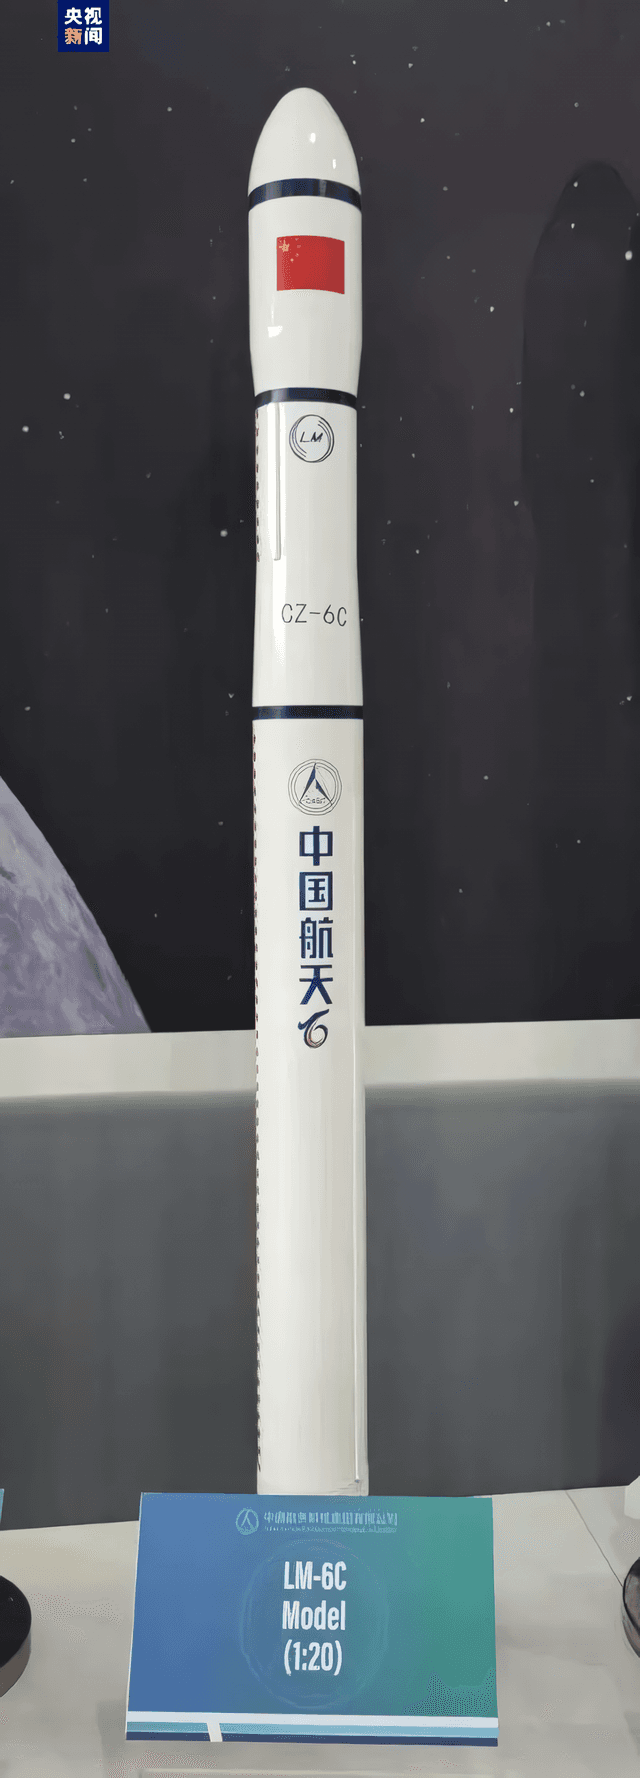 Long March 6C rocket